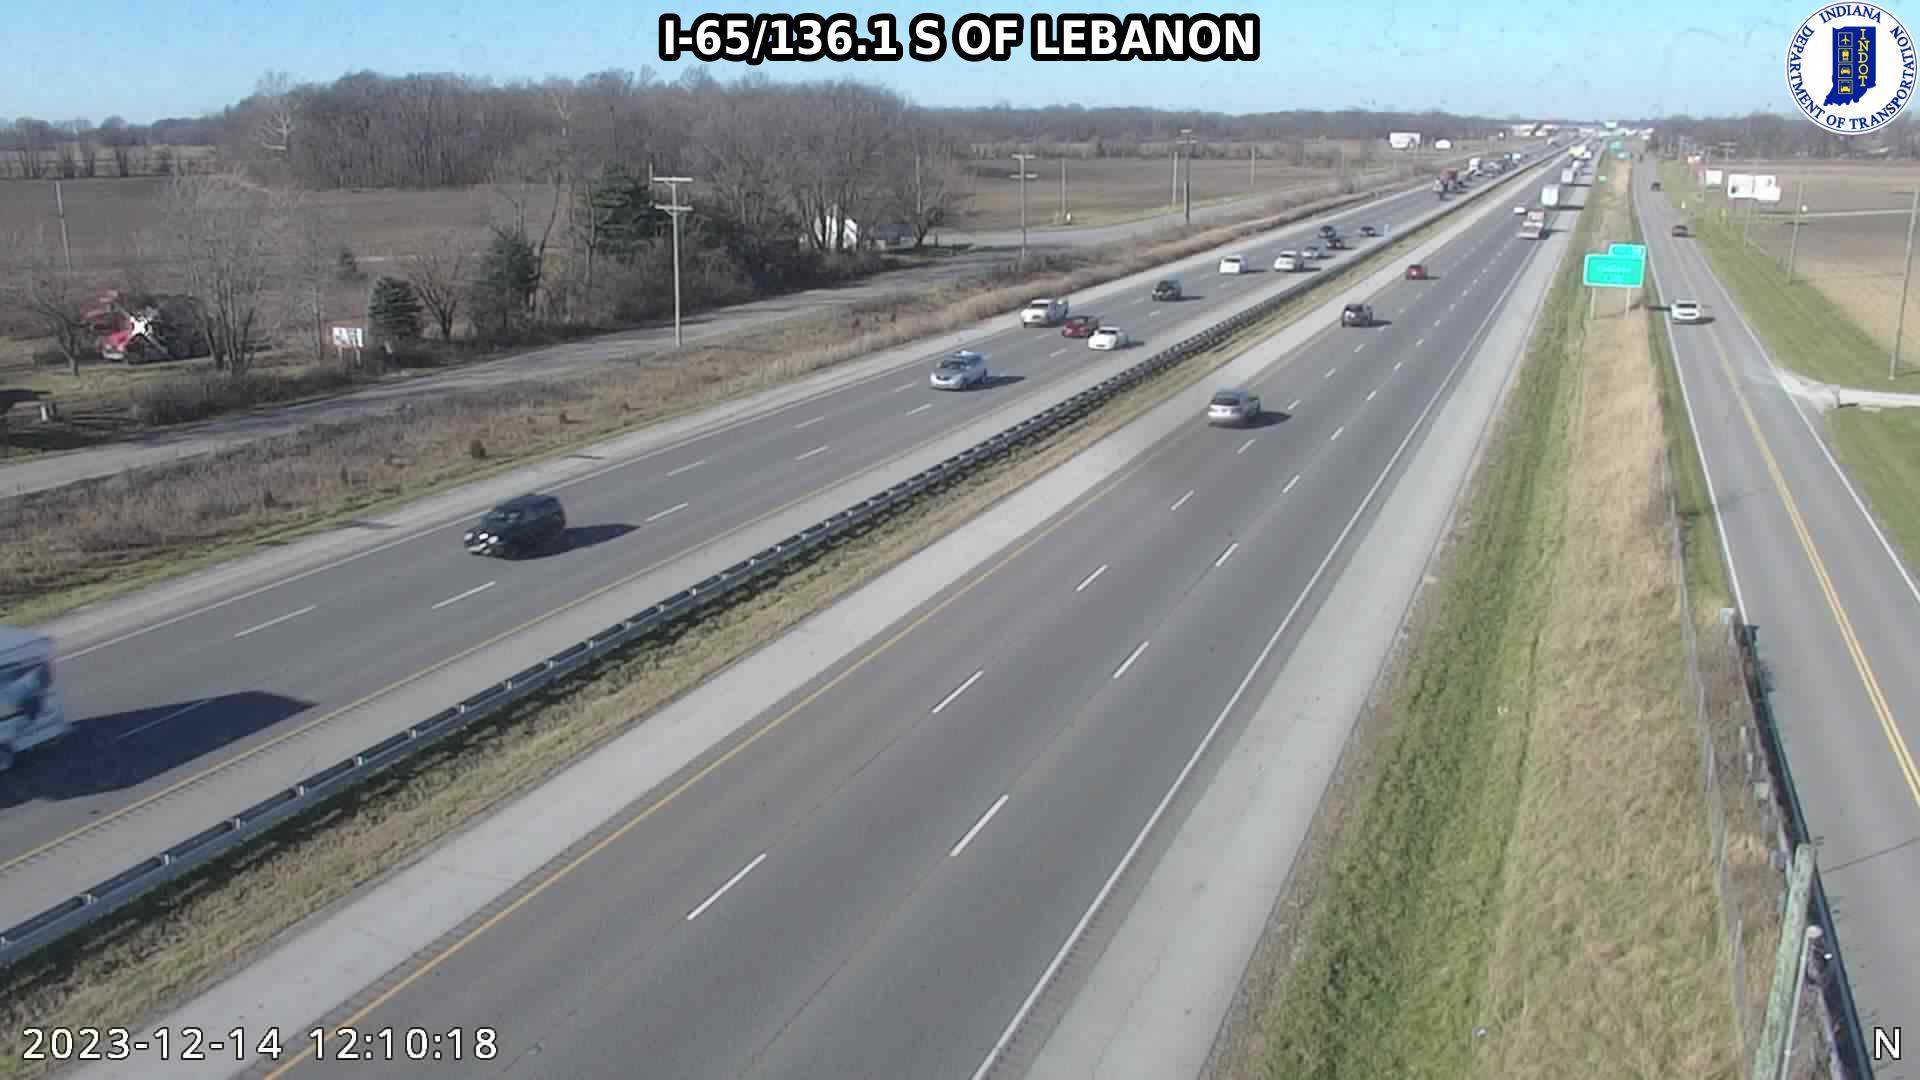 Dale: I-65: I-65/136.1 S OF LEBANON Traffic Camera